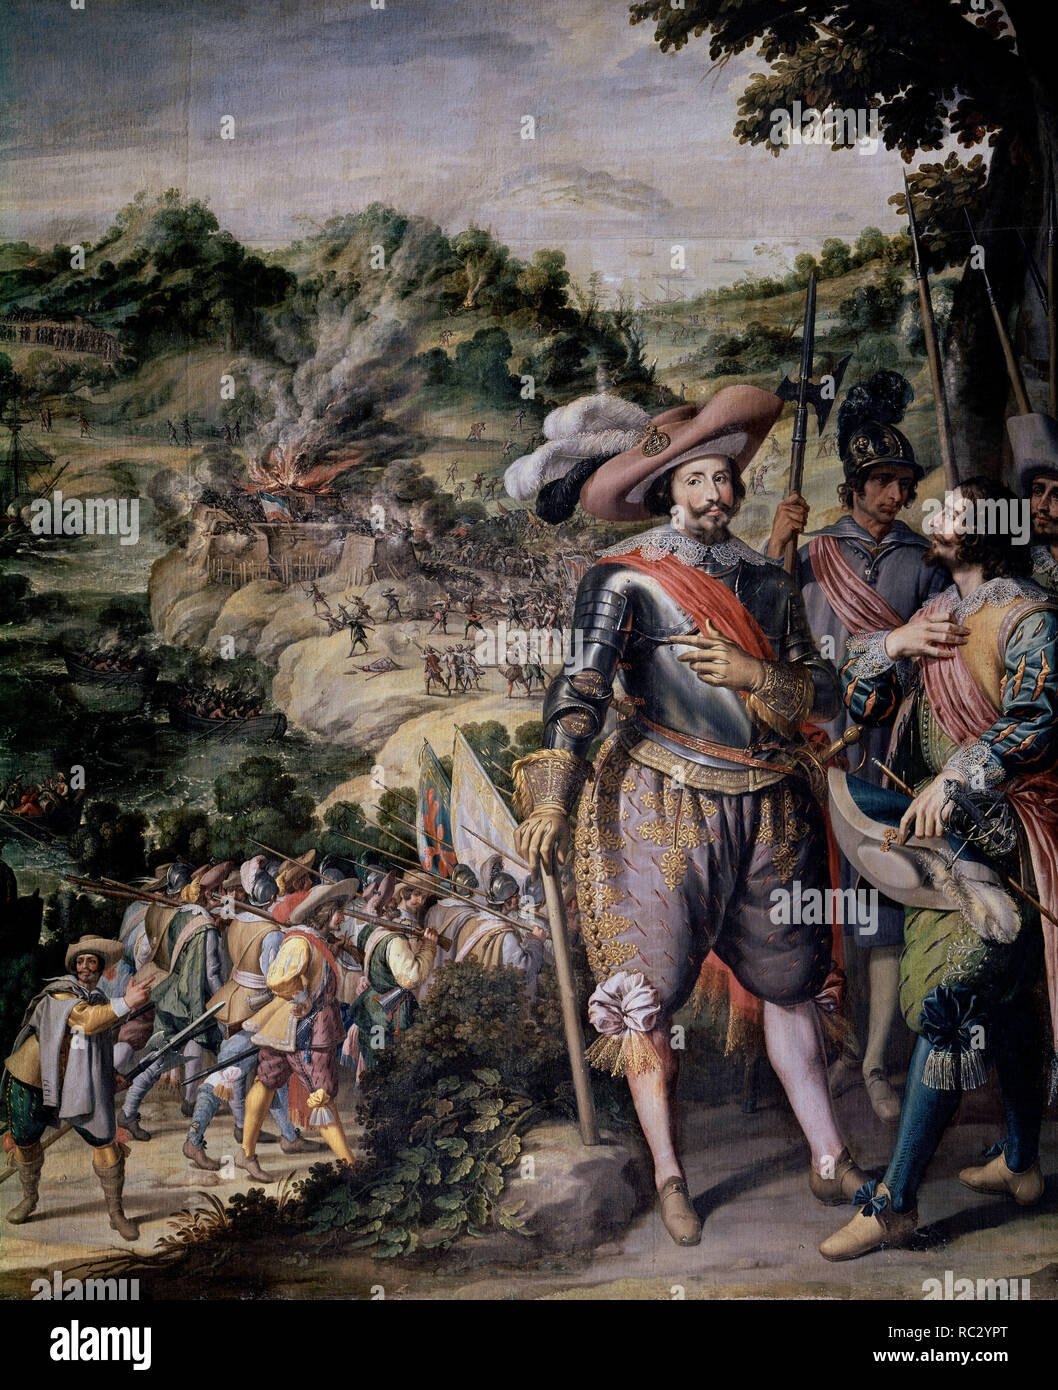 'The Recapture of the Island of San Cristobal' (detail), 1634, Oil on canvas, 297 cm x 311 cm, P00654. Author: CASTELO FELIX. Location: MUSEO DEL PRADO-PINTURA. MADRID. SPAIN. Stock Photo